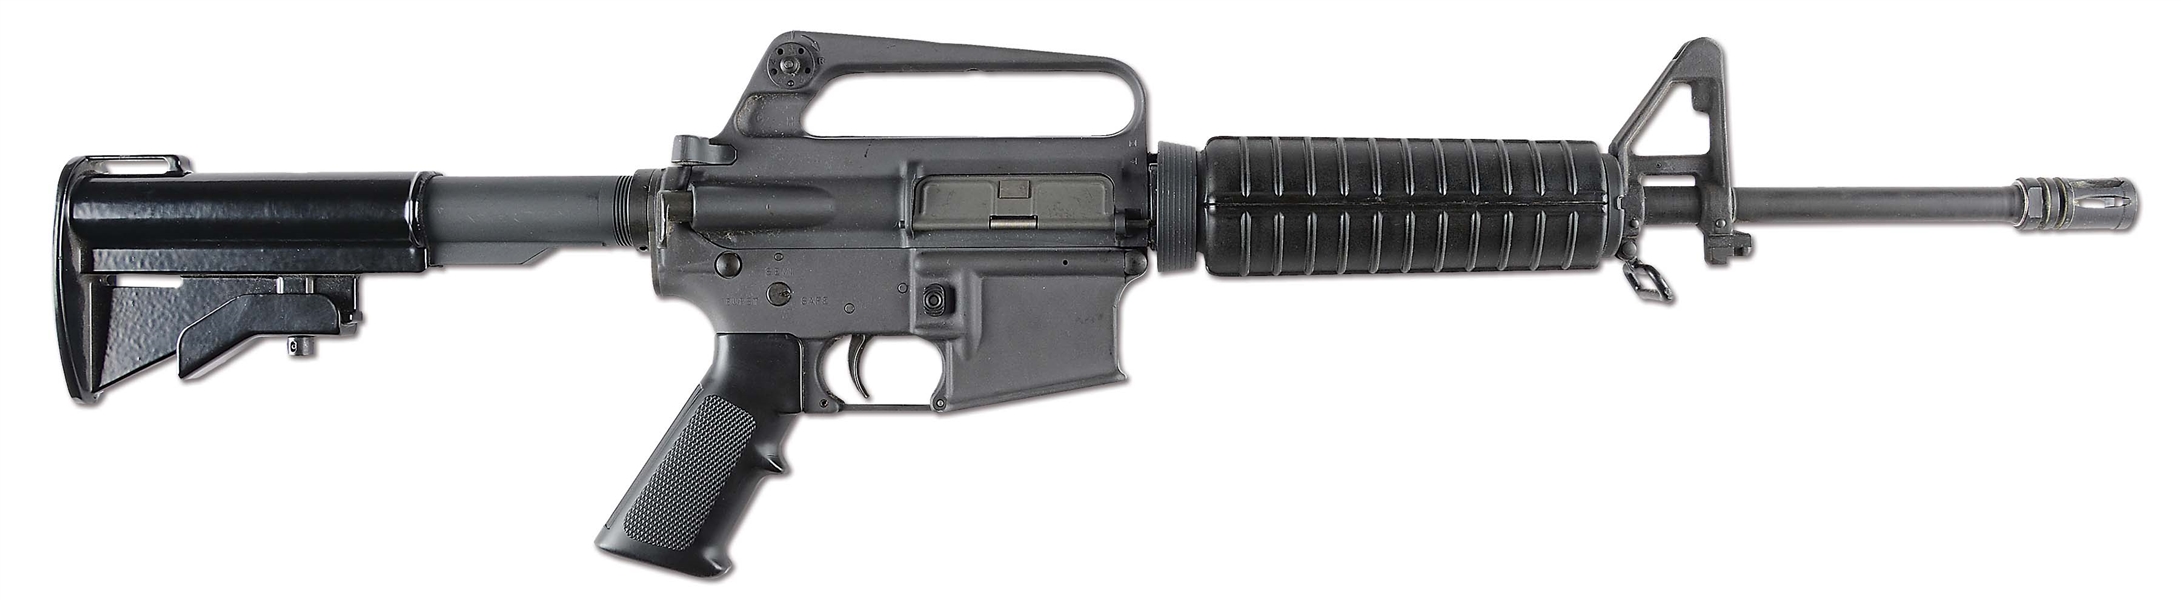 (N) MINT UNFIRED COLT M16A2 MACHINE GUN (FULLY TRANSFERABLE).